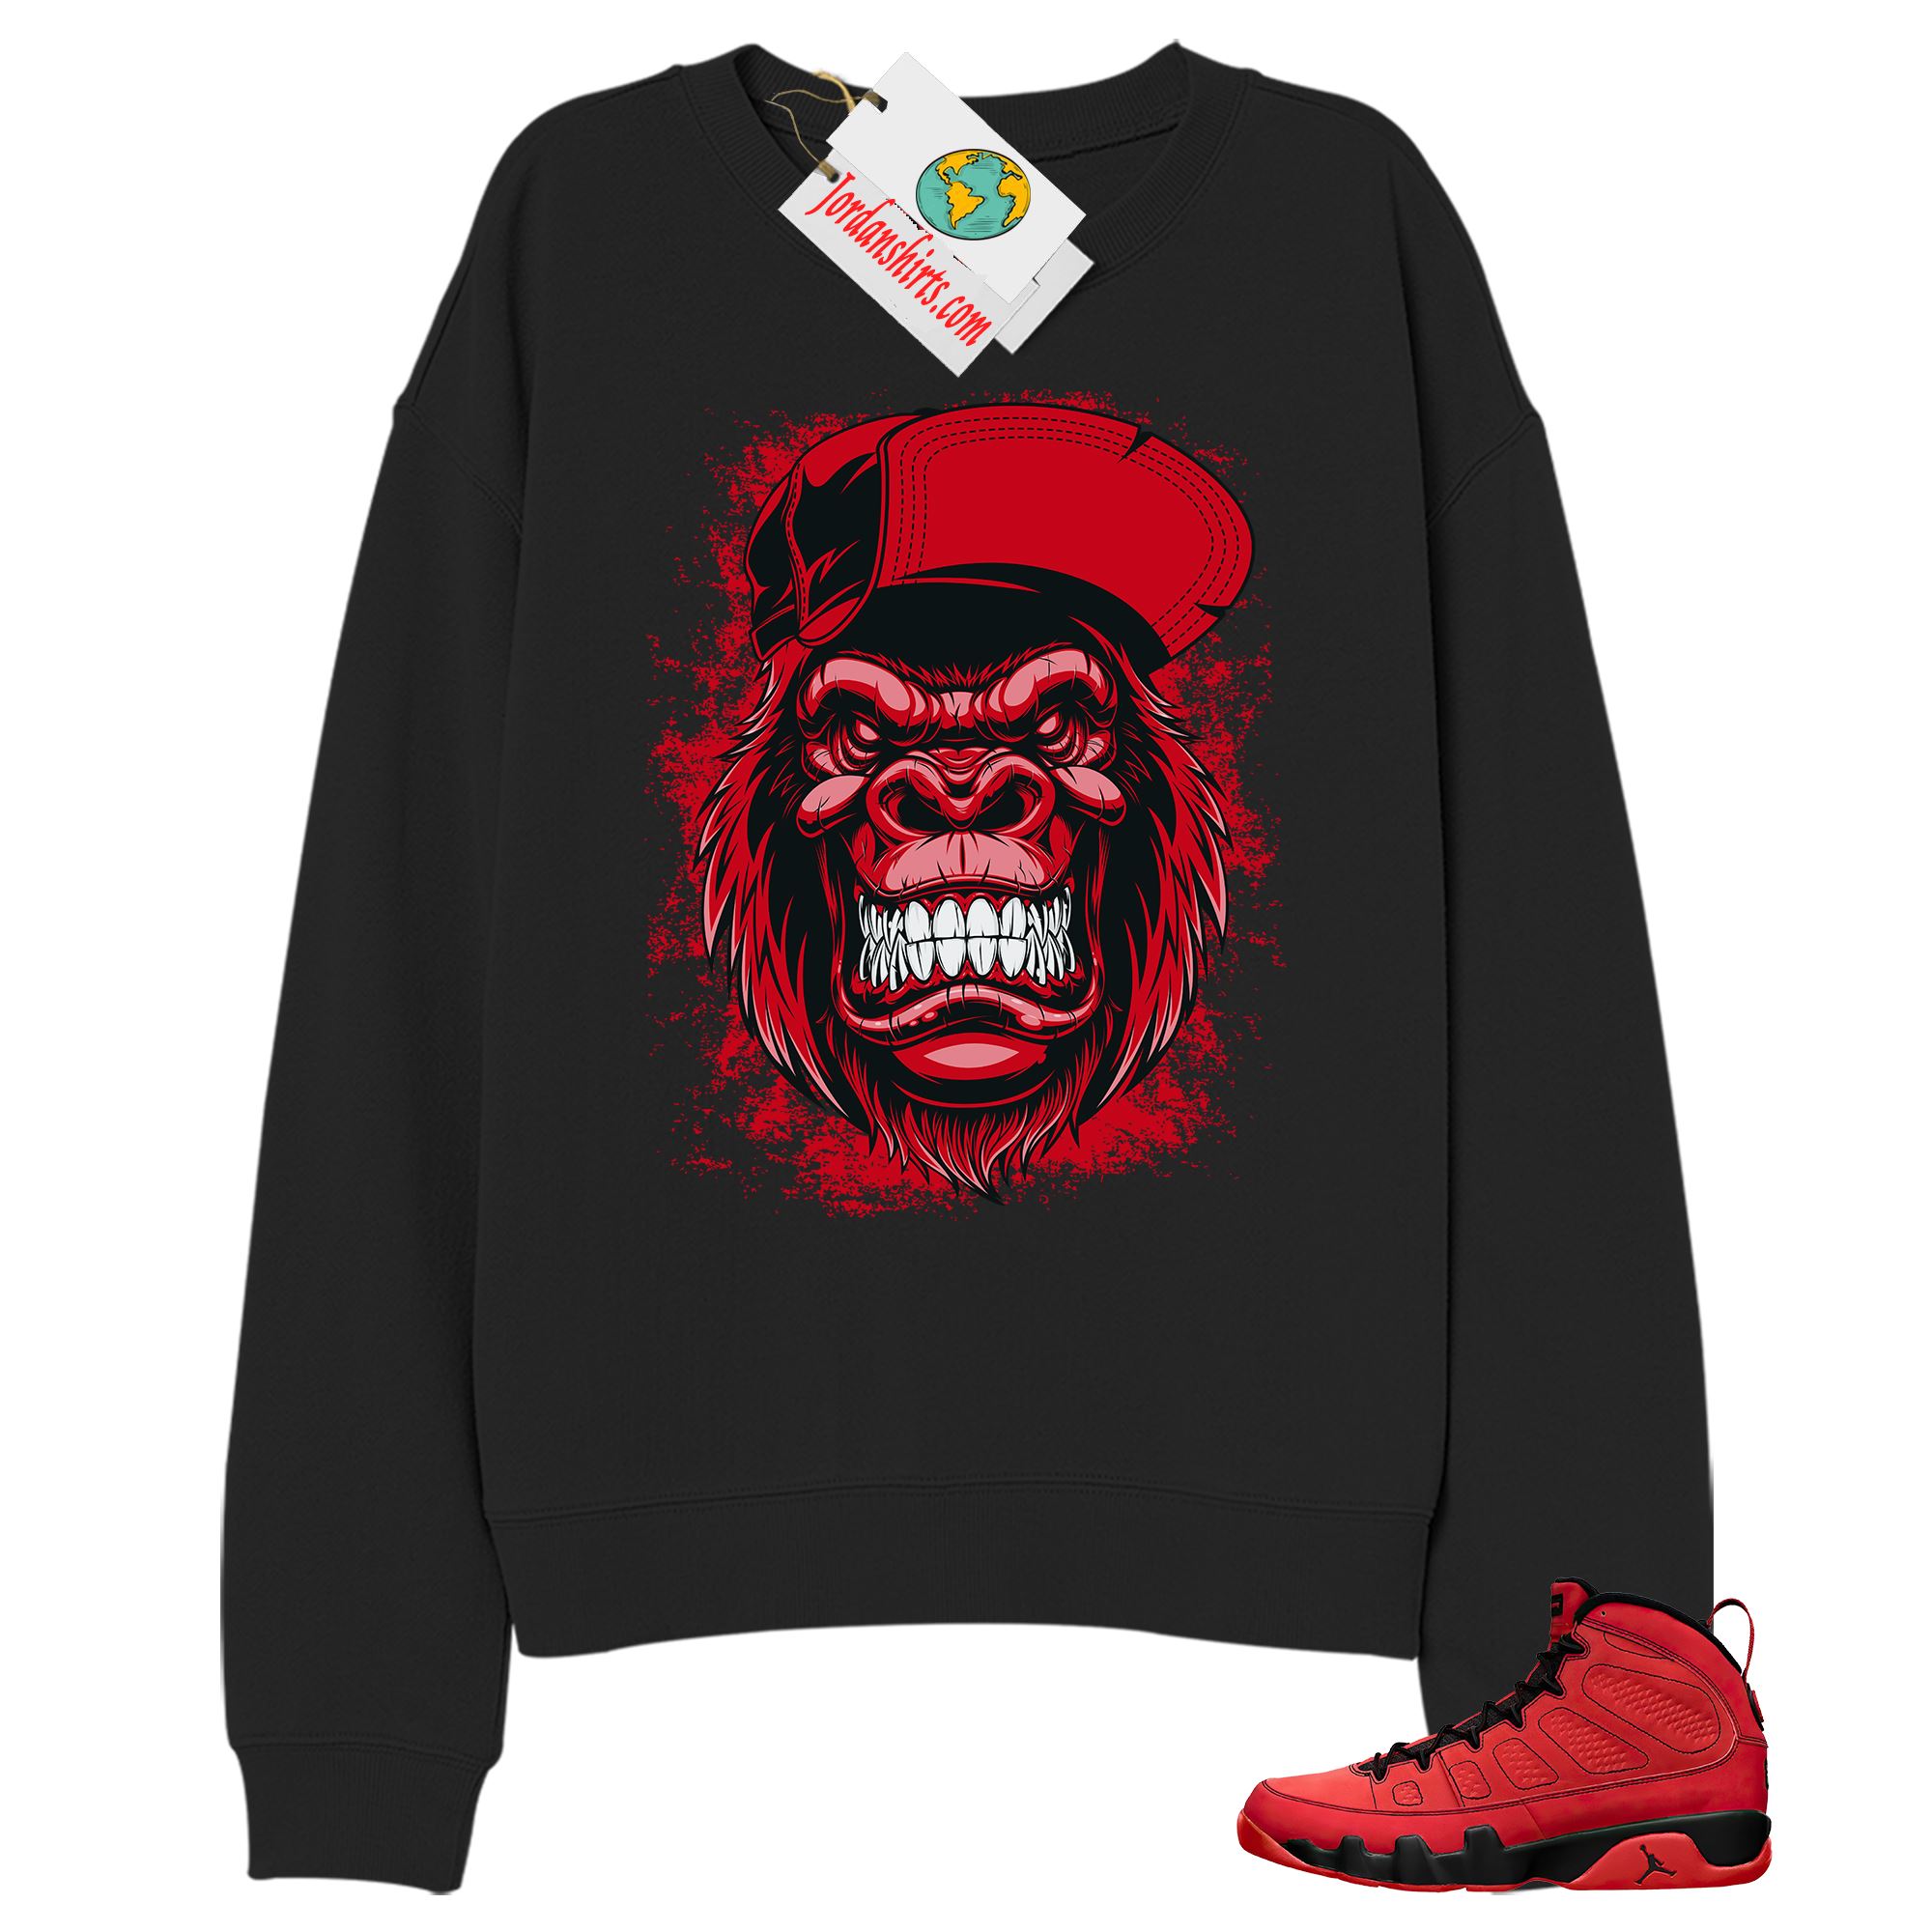 Jordan 9 Sweatshirt, Ferocious Gorilla Black Sweatshirt Air Jordan 9 Chile Red 9s Full Size Up To 5xl